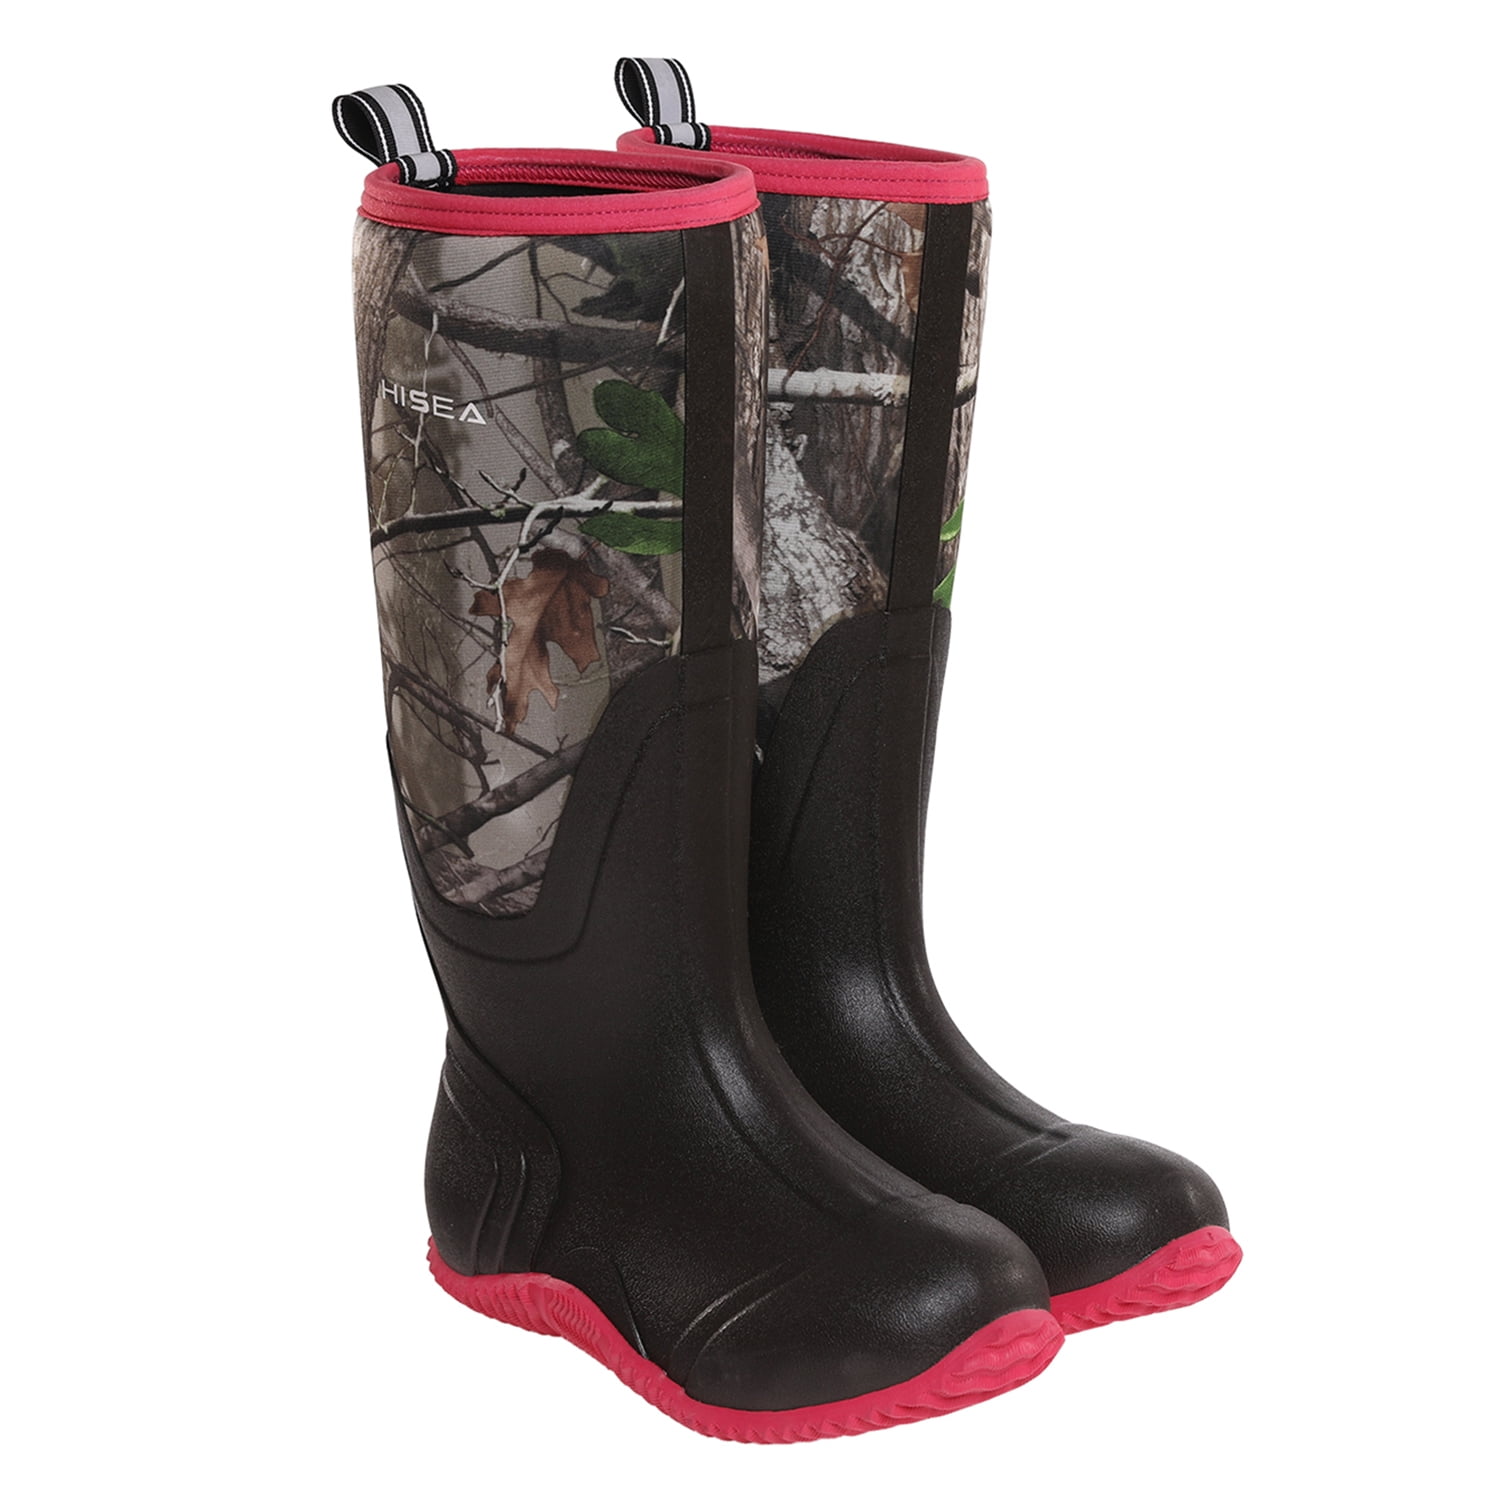 Women's Mid Calf Rain Boots Waterproof Garden Shoes 